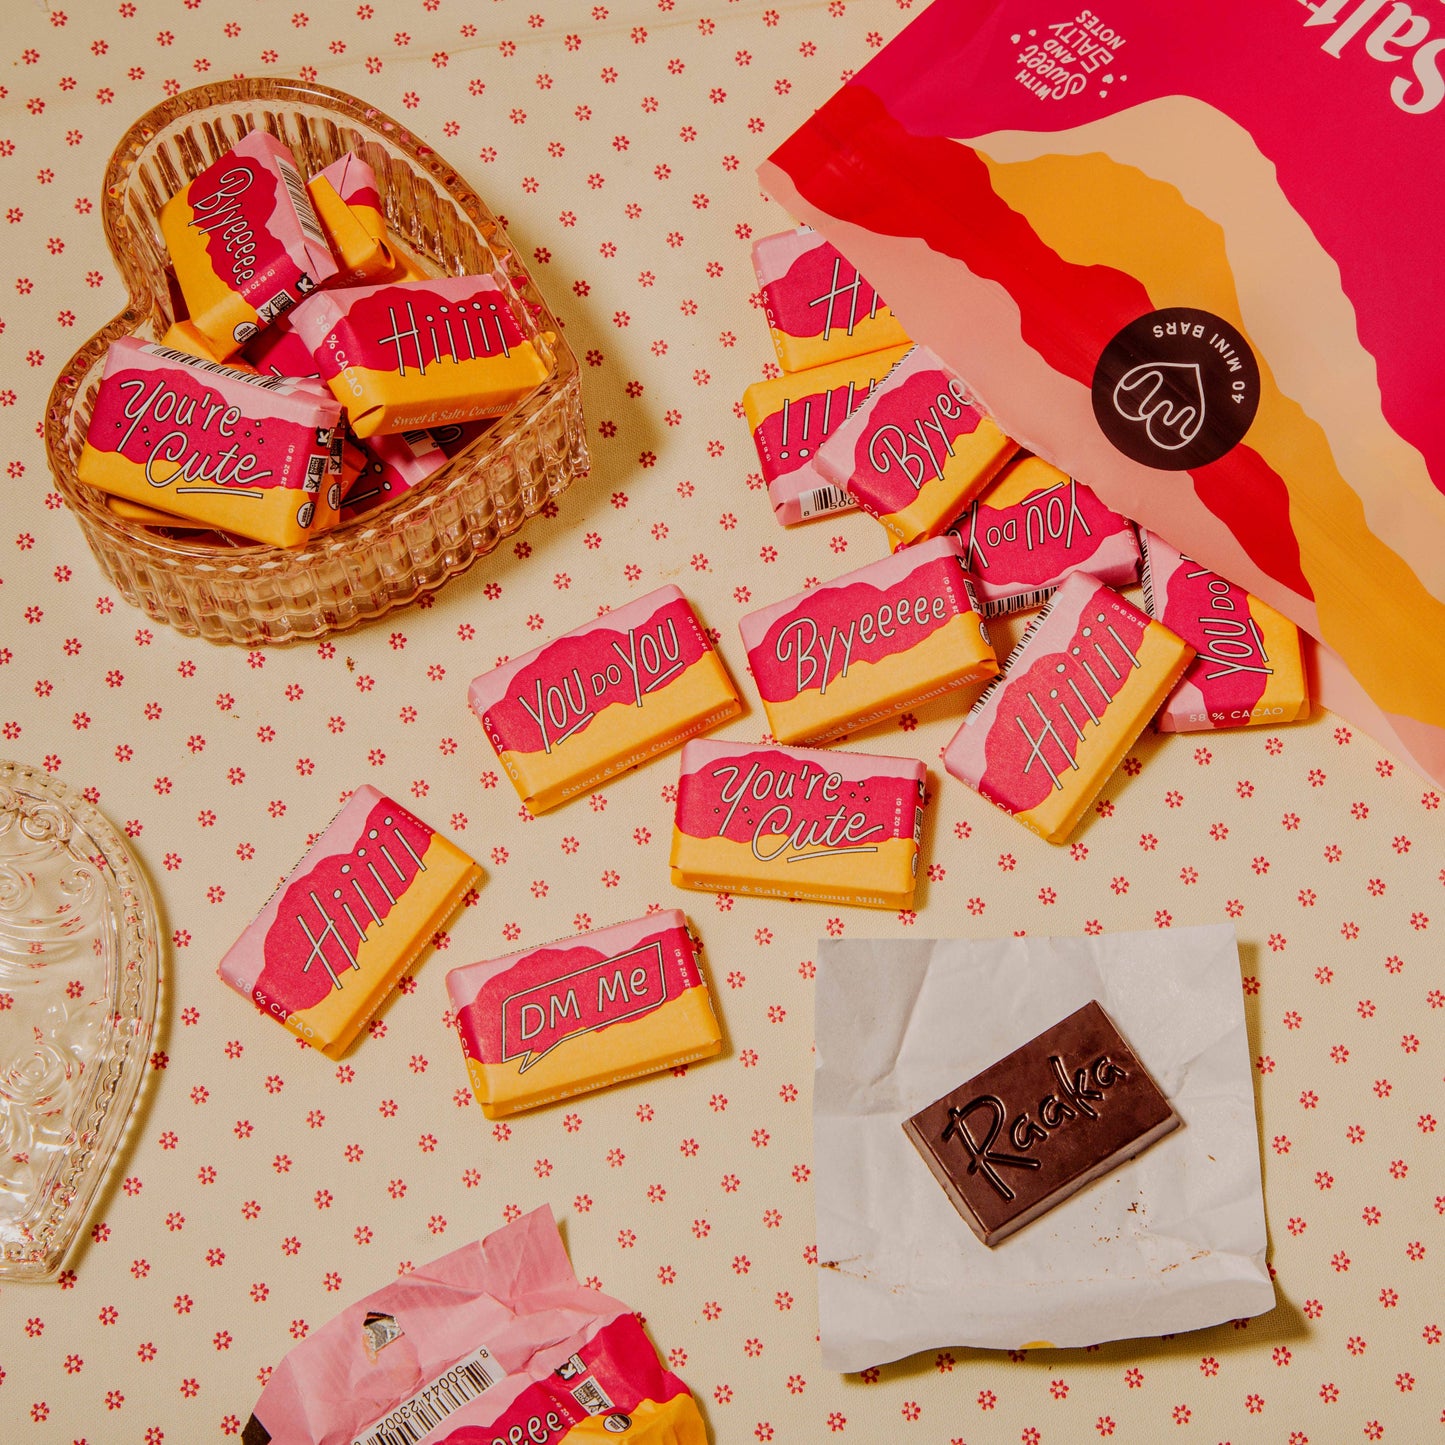 Raaka | Sweet & Salty Coconut Milk Mini Chocolates - Valentine's Day